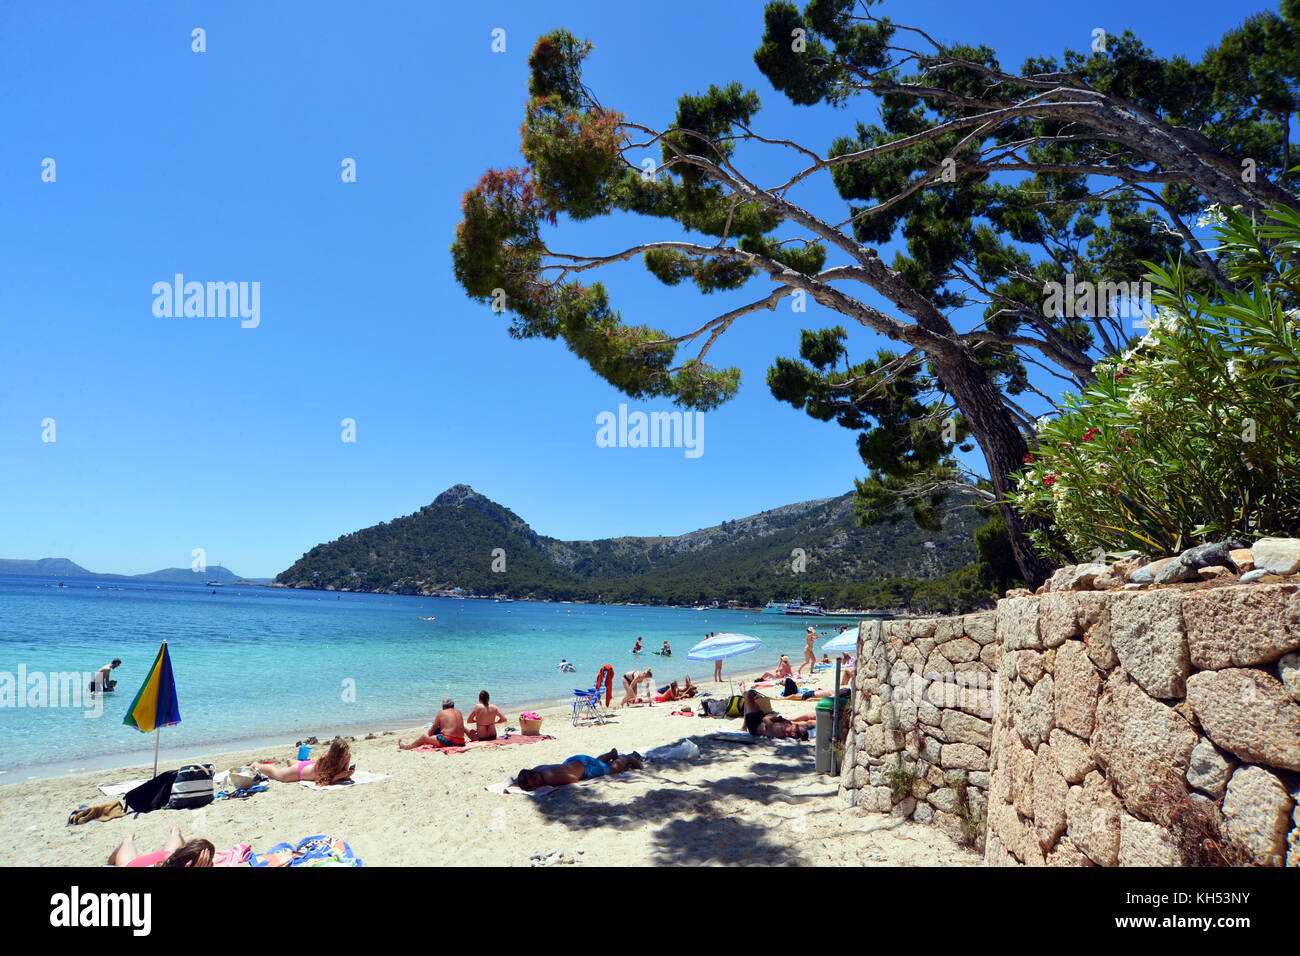 Summer holiday beach in Majorca Balearic Islands, Spain. Stock Photo